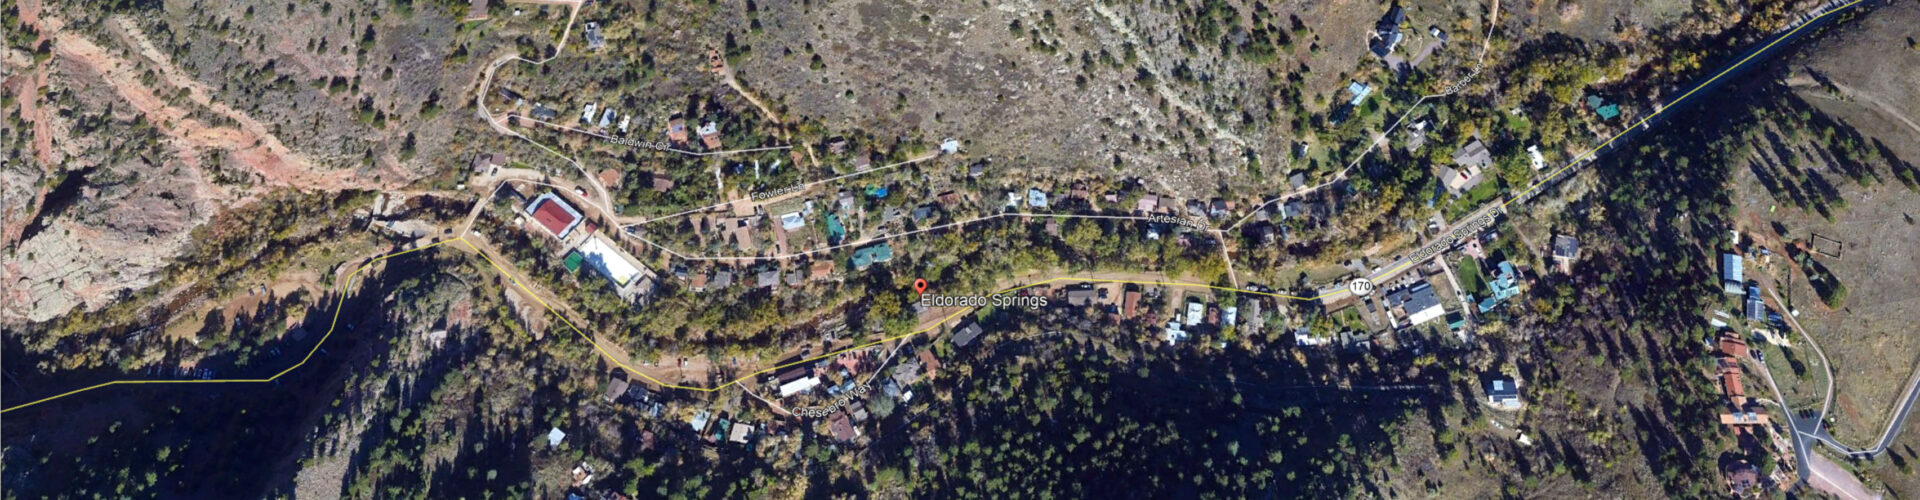 Eldorado Springs aerial image